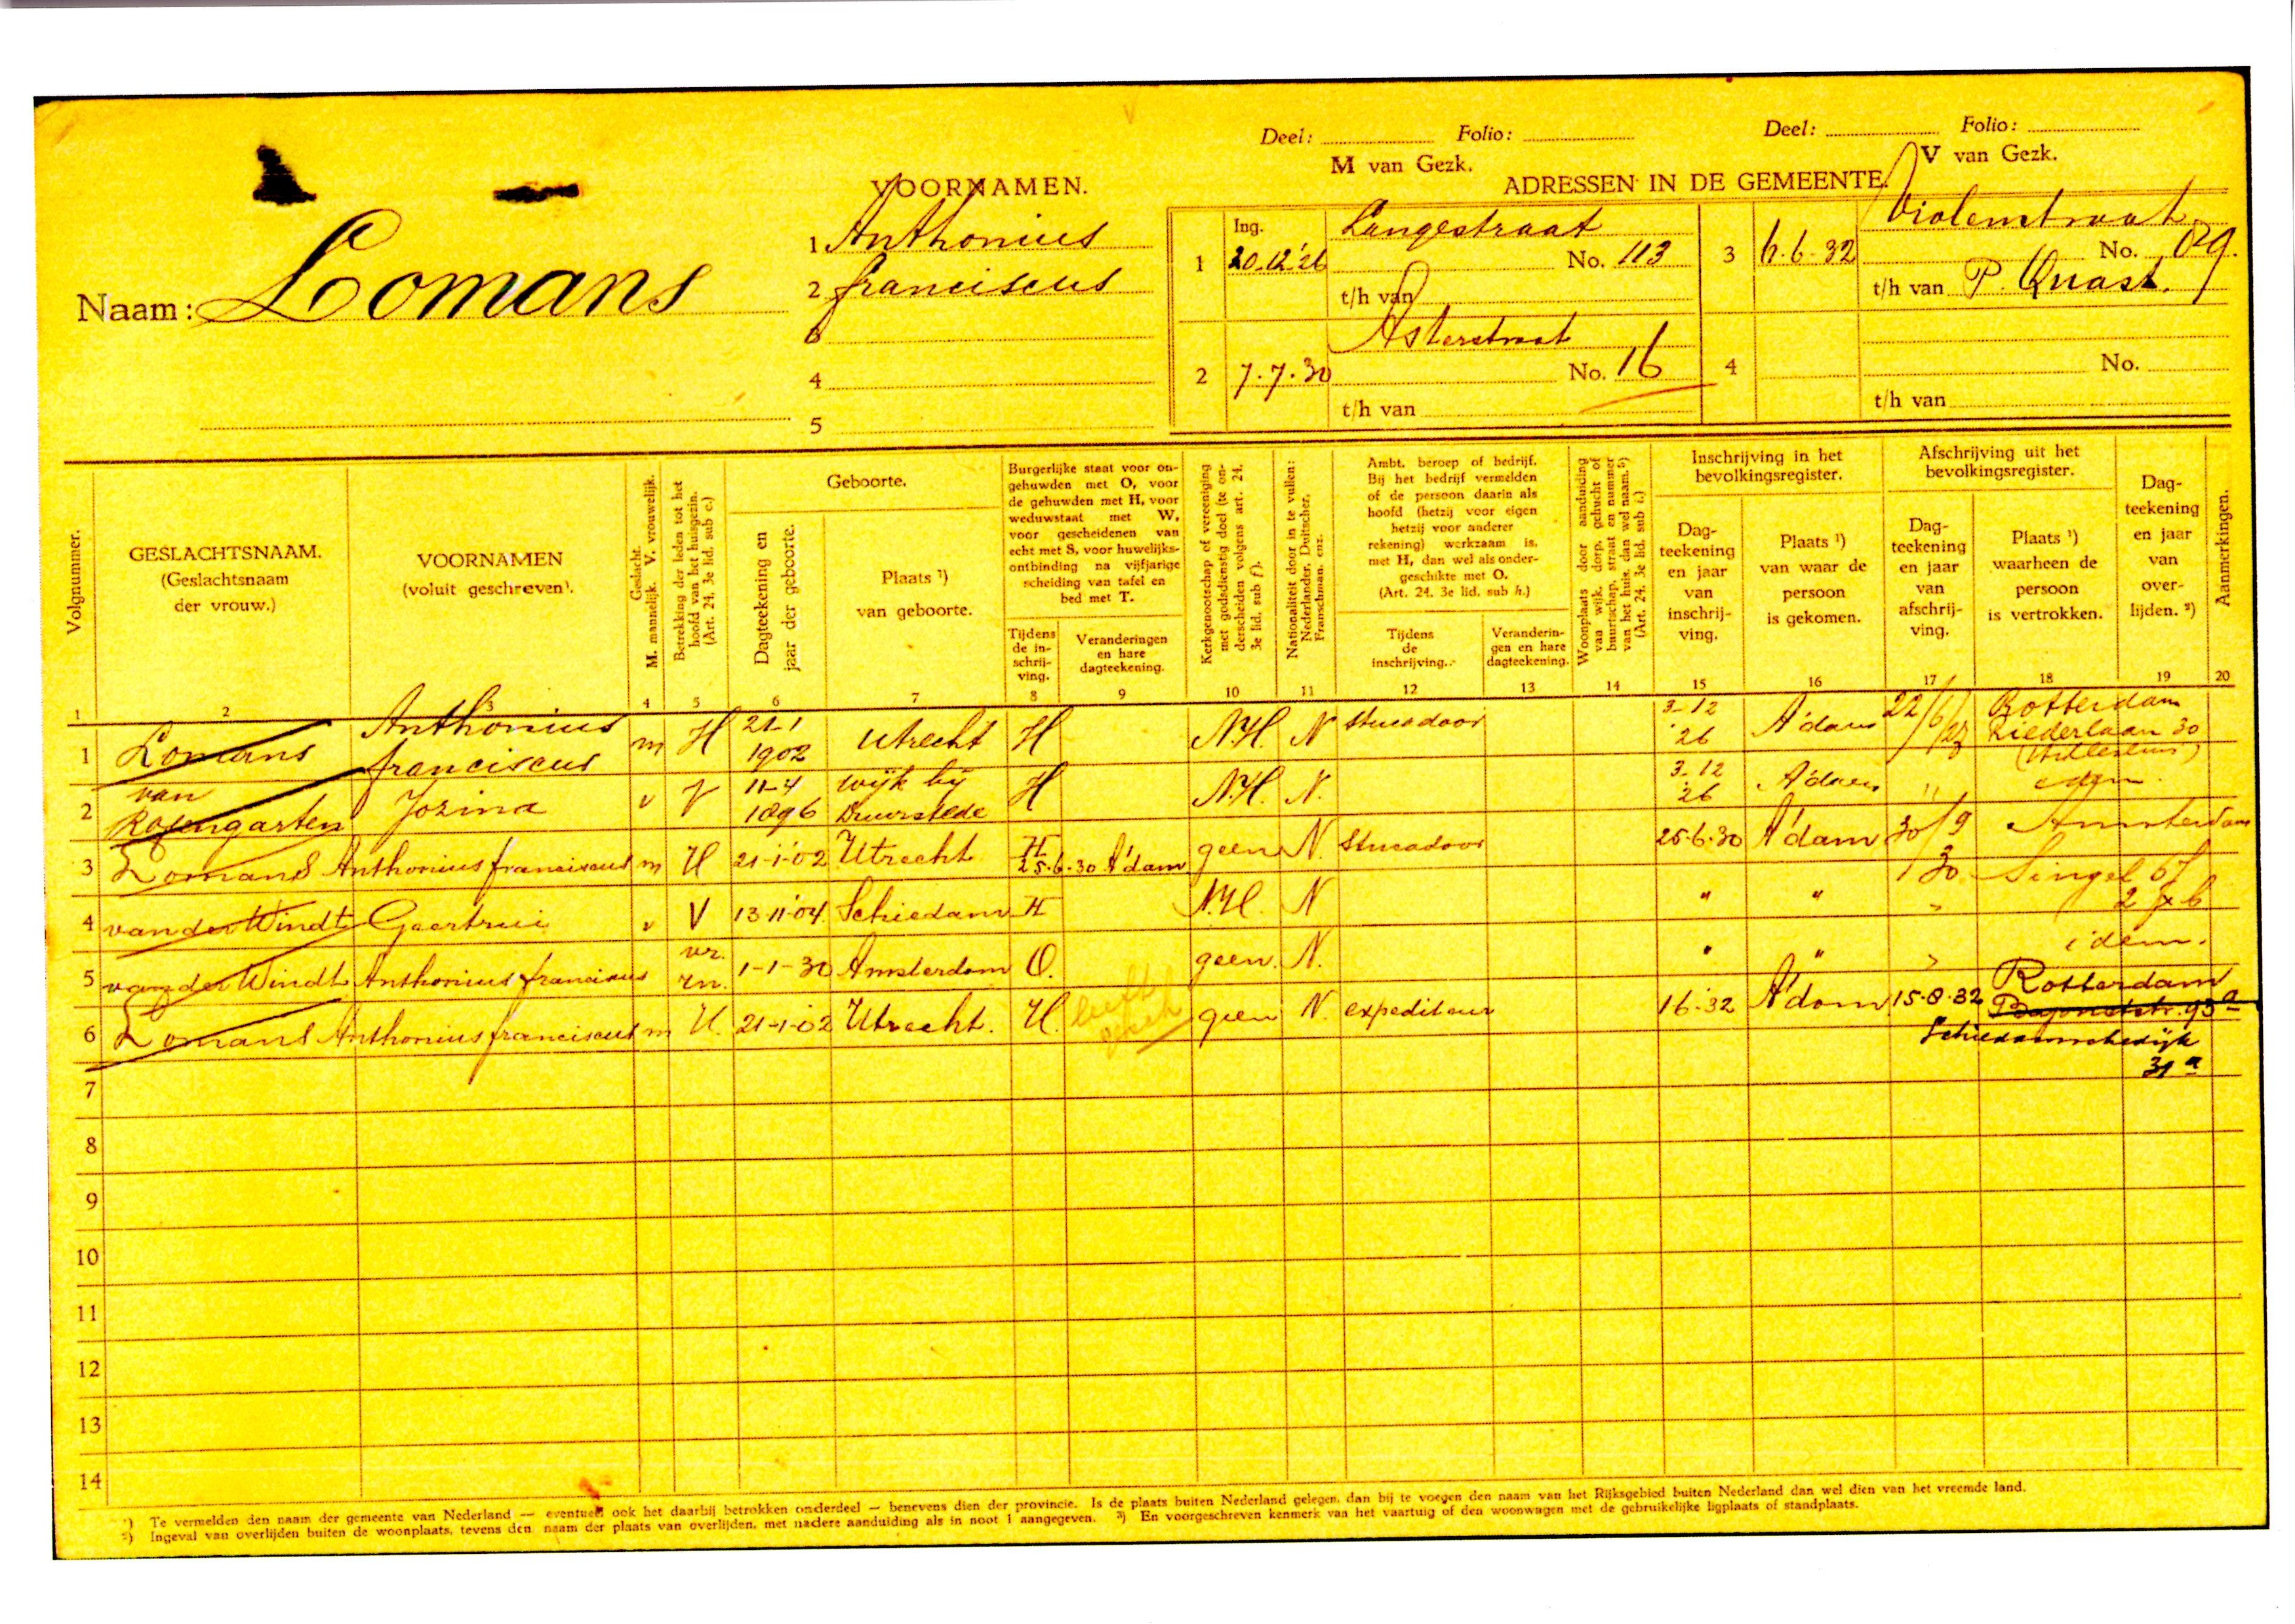 1902-01-21 Persoonskaart Anthonius Franciscus Lomans